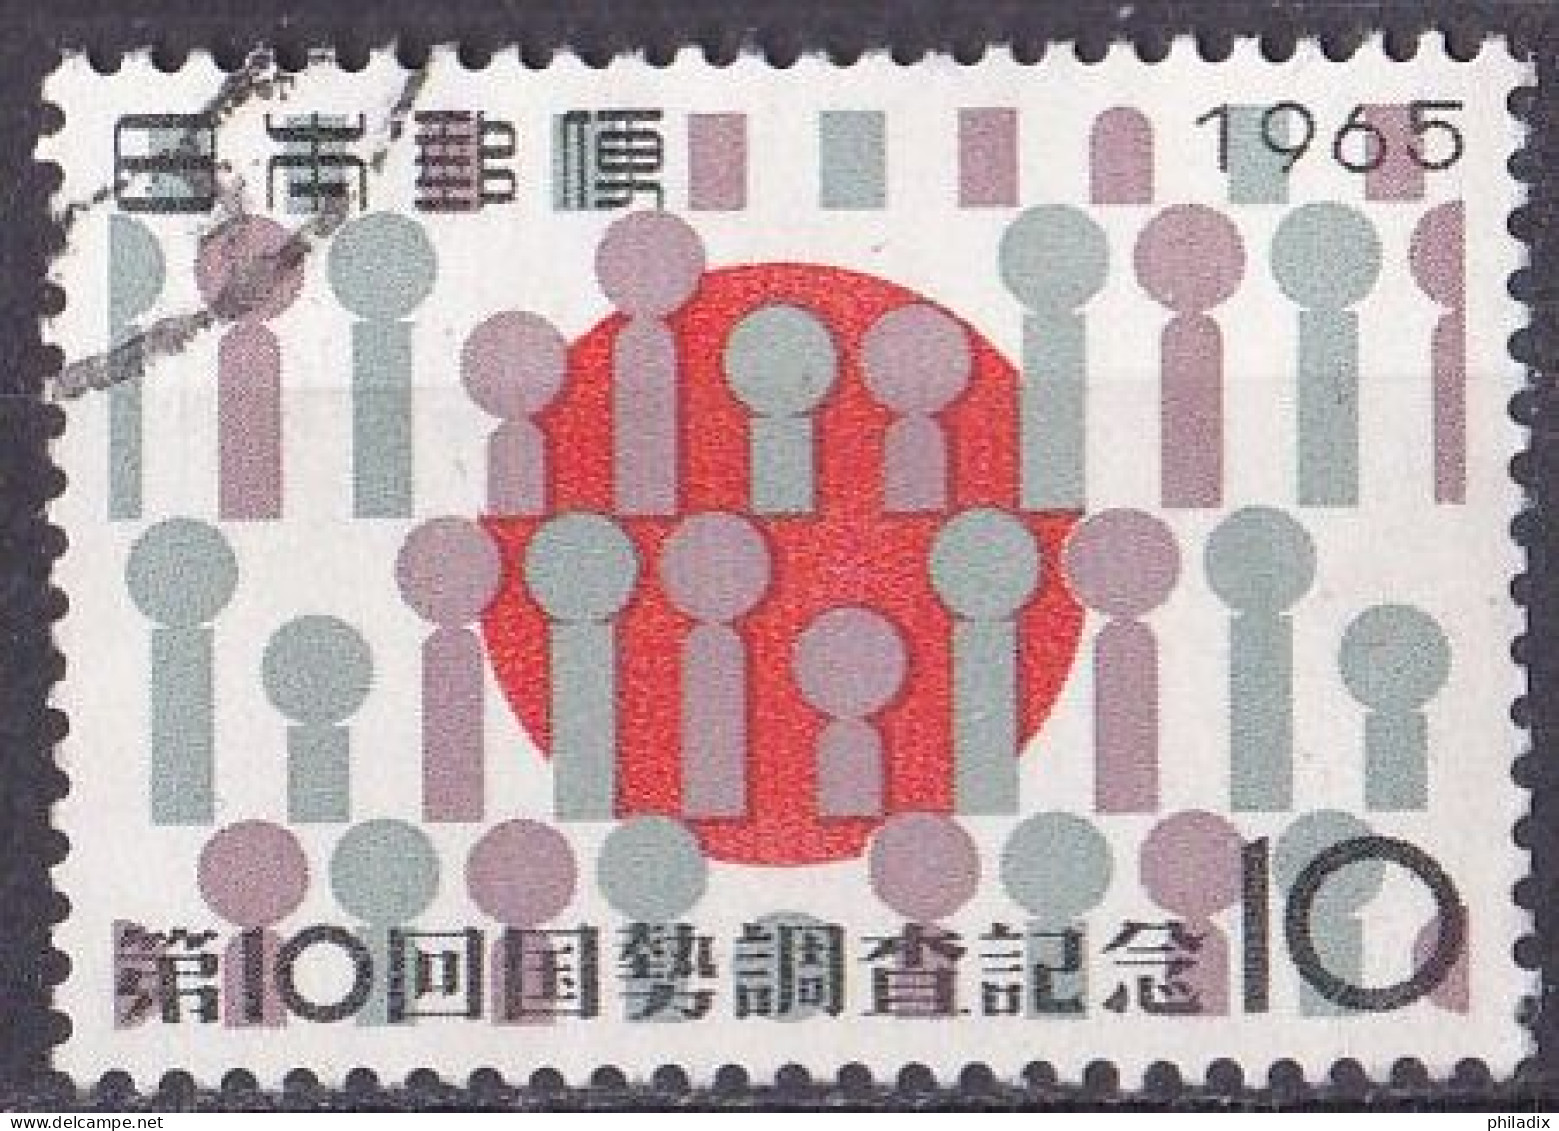 Japan Marke Von 1965 O/used (A4-4) - Oblitérés